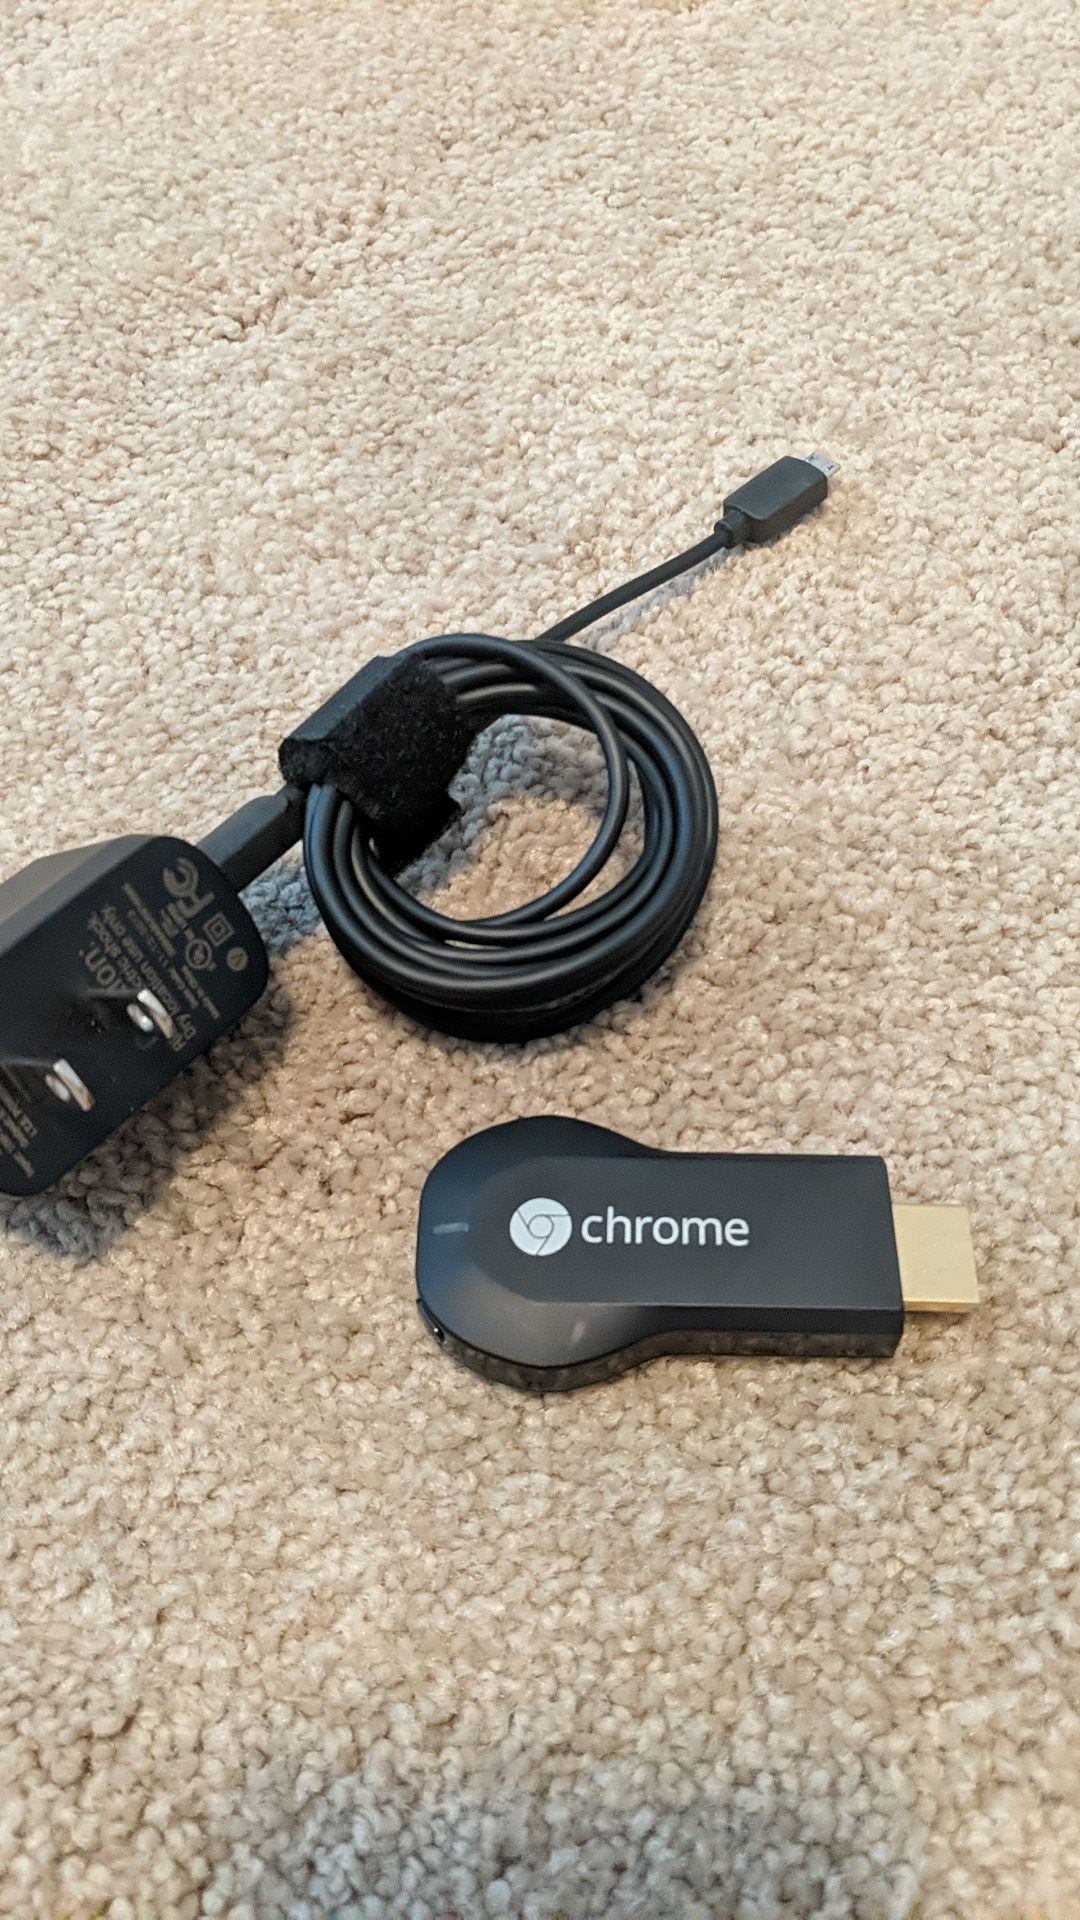 Google Chromecast - Generation 1